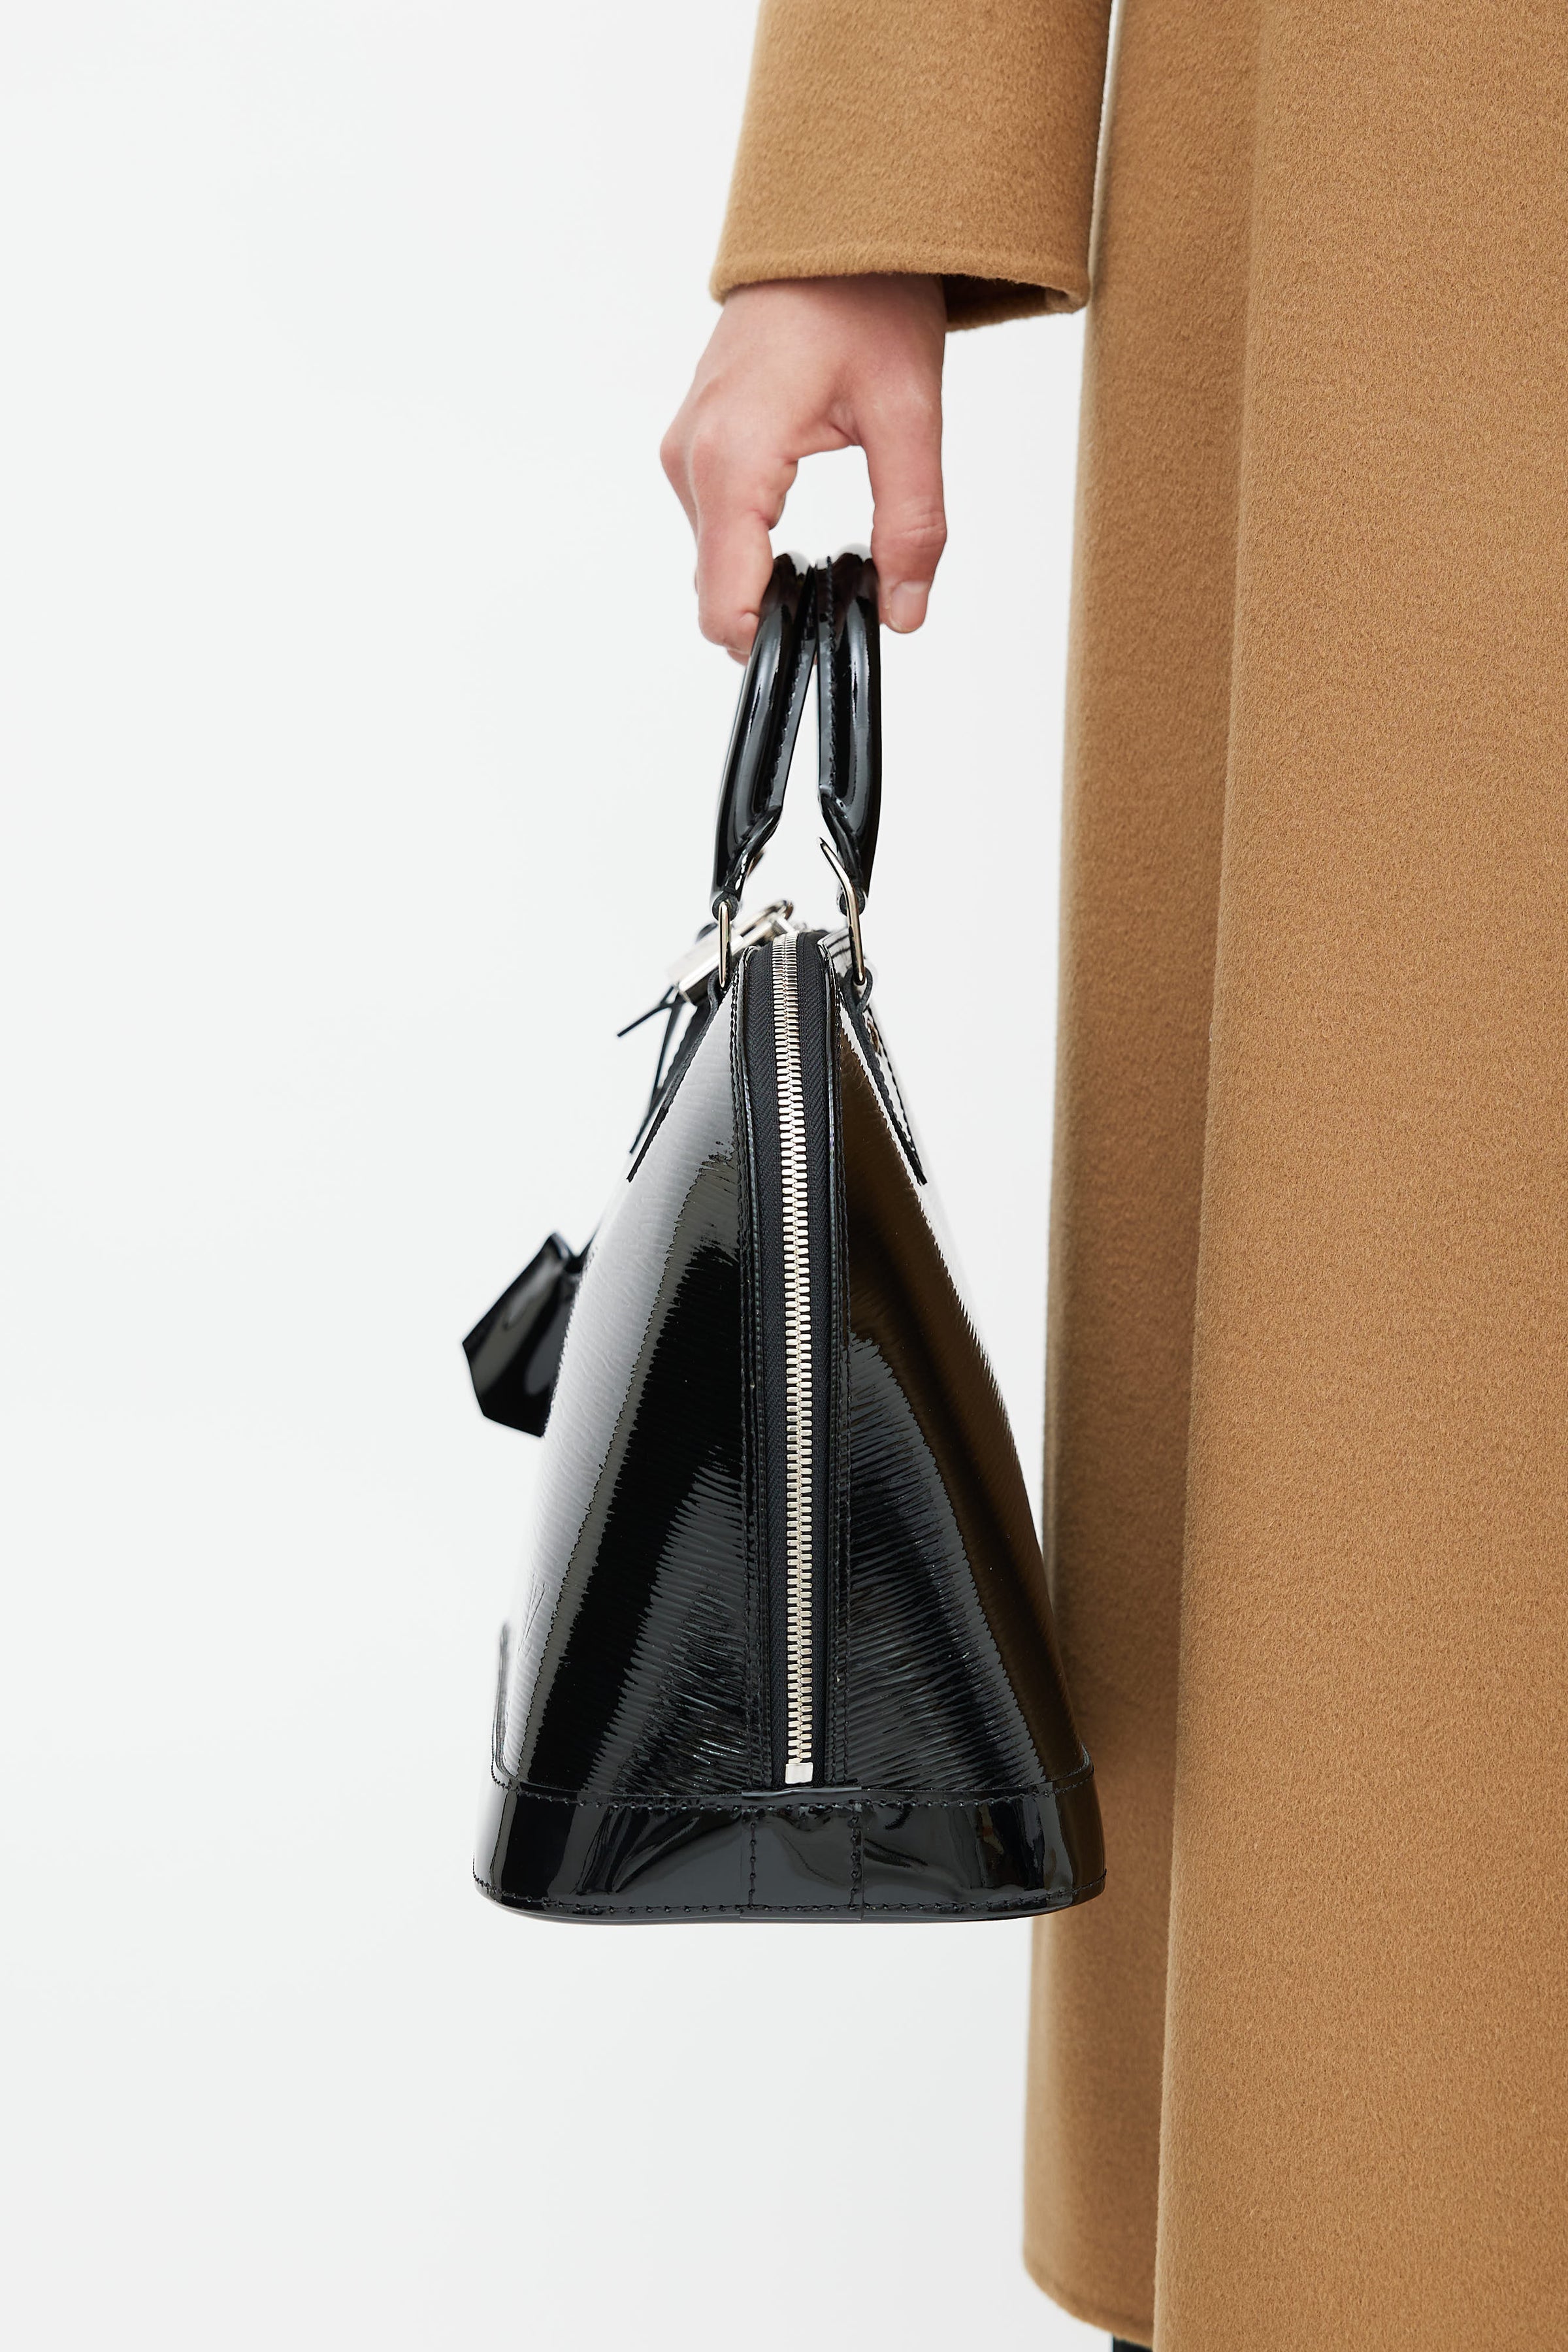 Louis Vuitton Alma Pm Patent Leather Handbag in Black